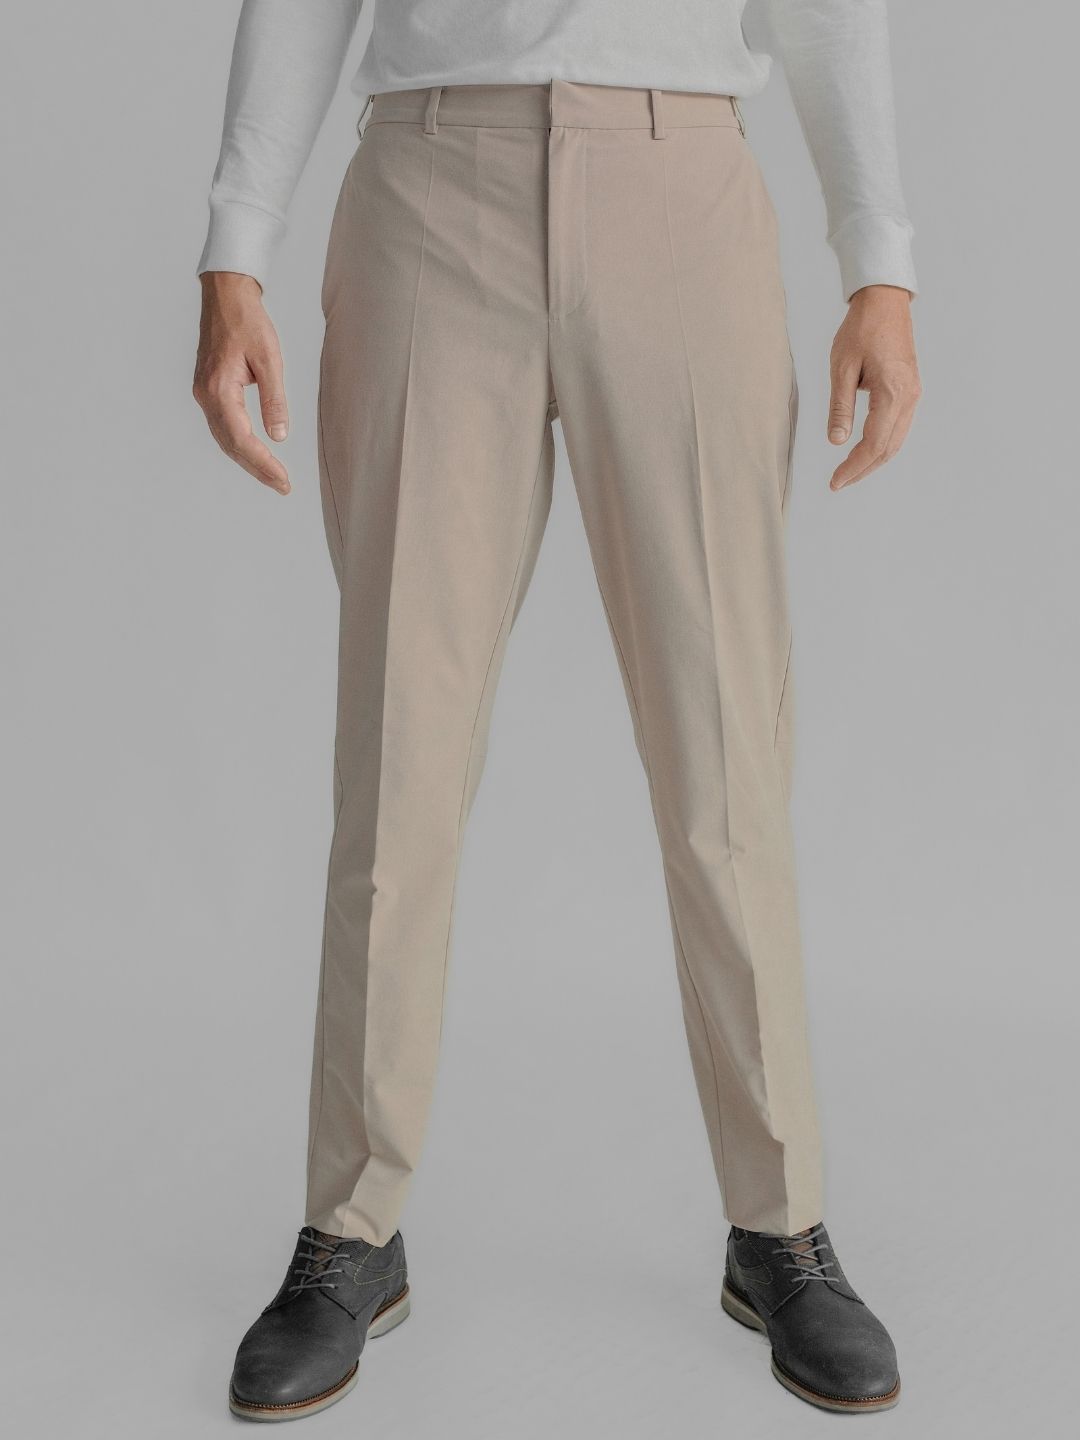 Ultra Suit 3.0 雙排扣套裝組合 白晝沙 + M-system - TRANZEND